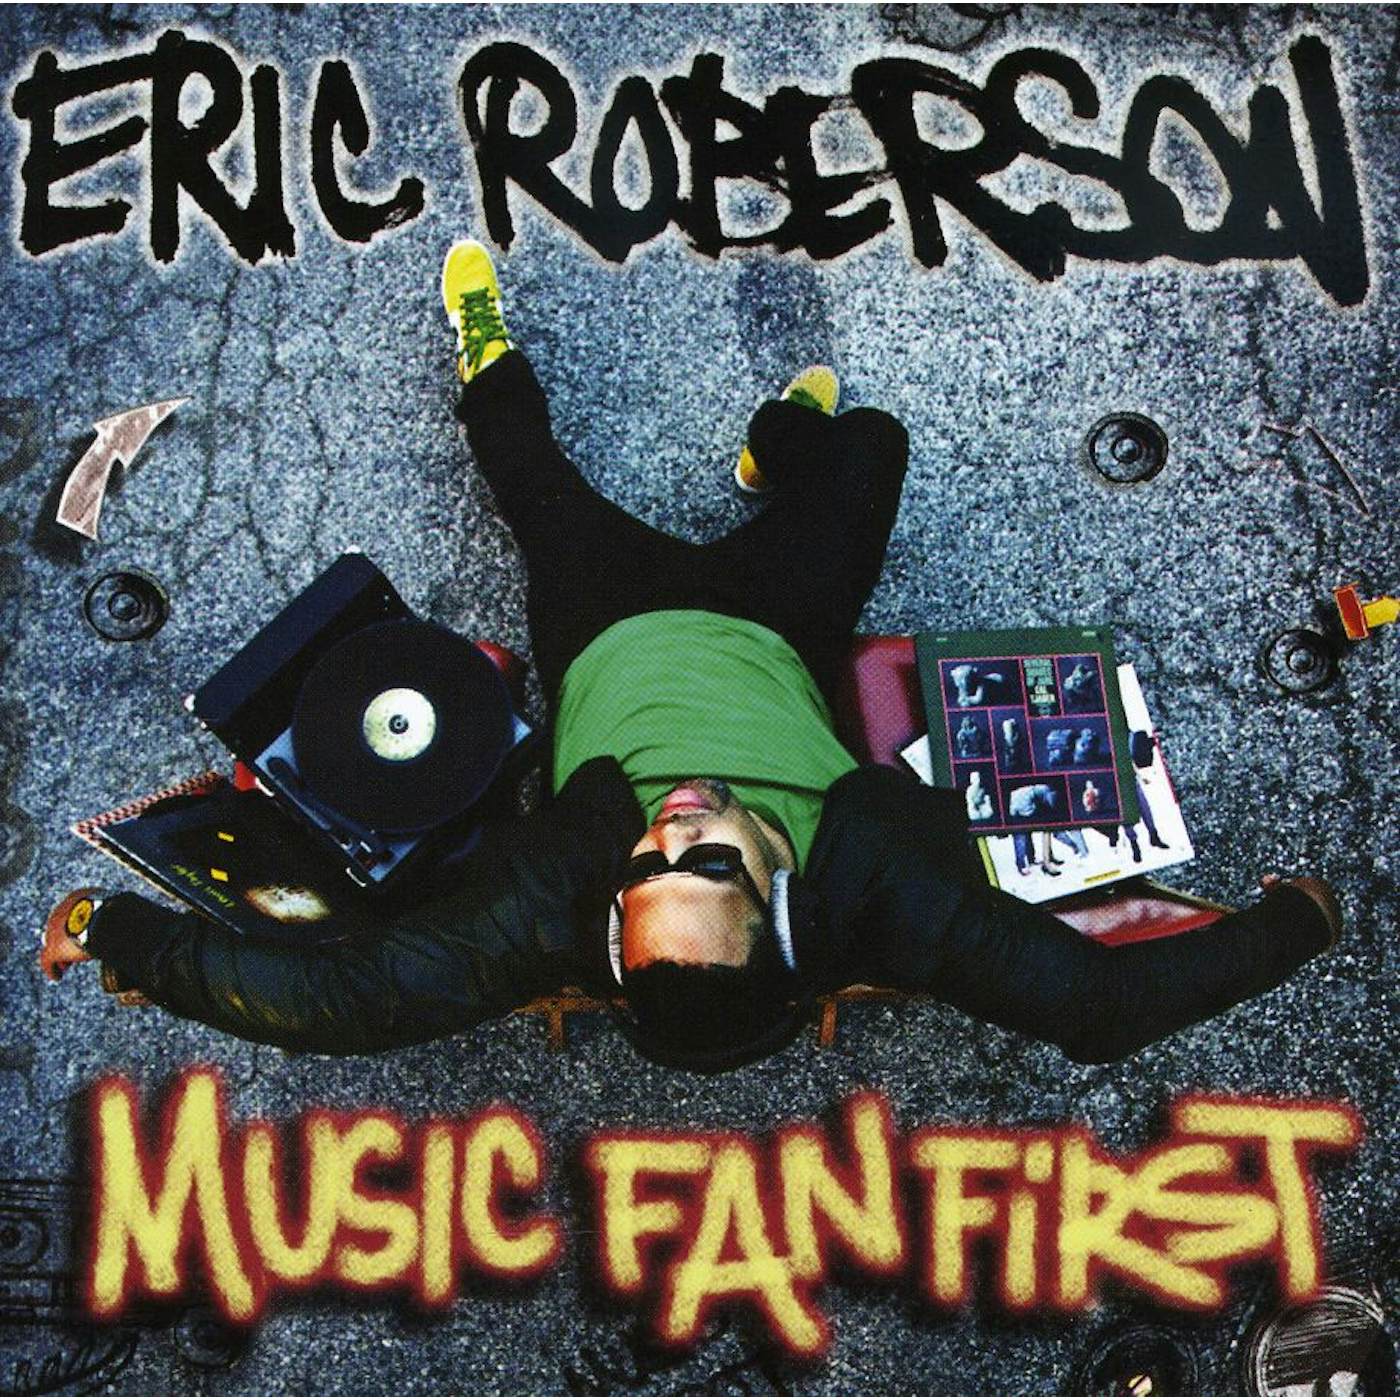 Eric Roberson MUSIC FAN FIRST CD